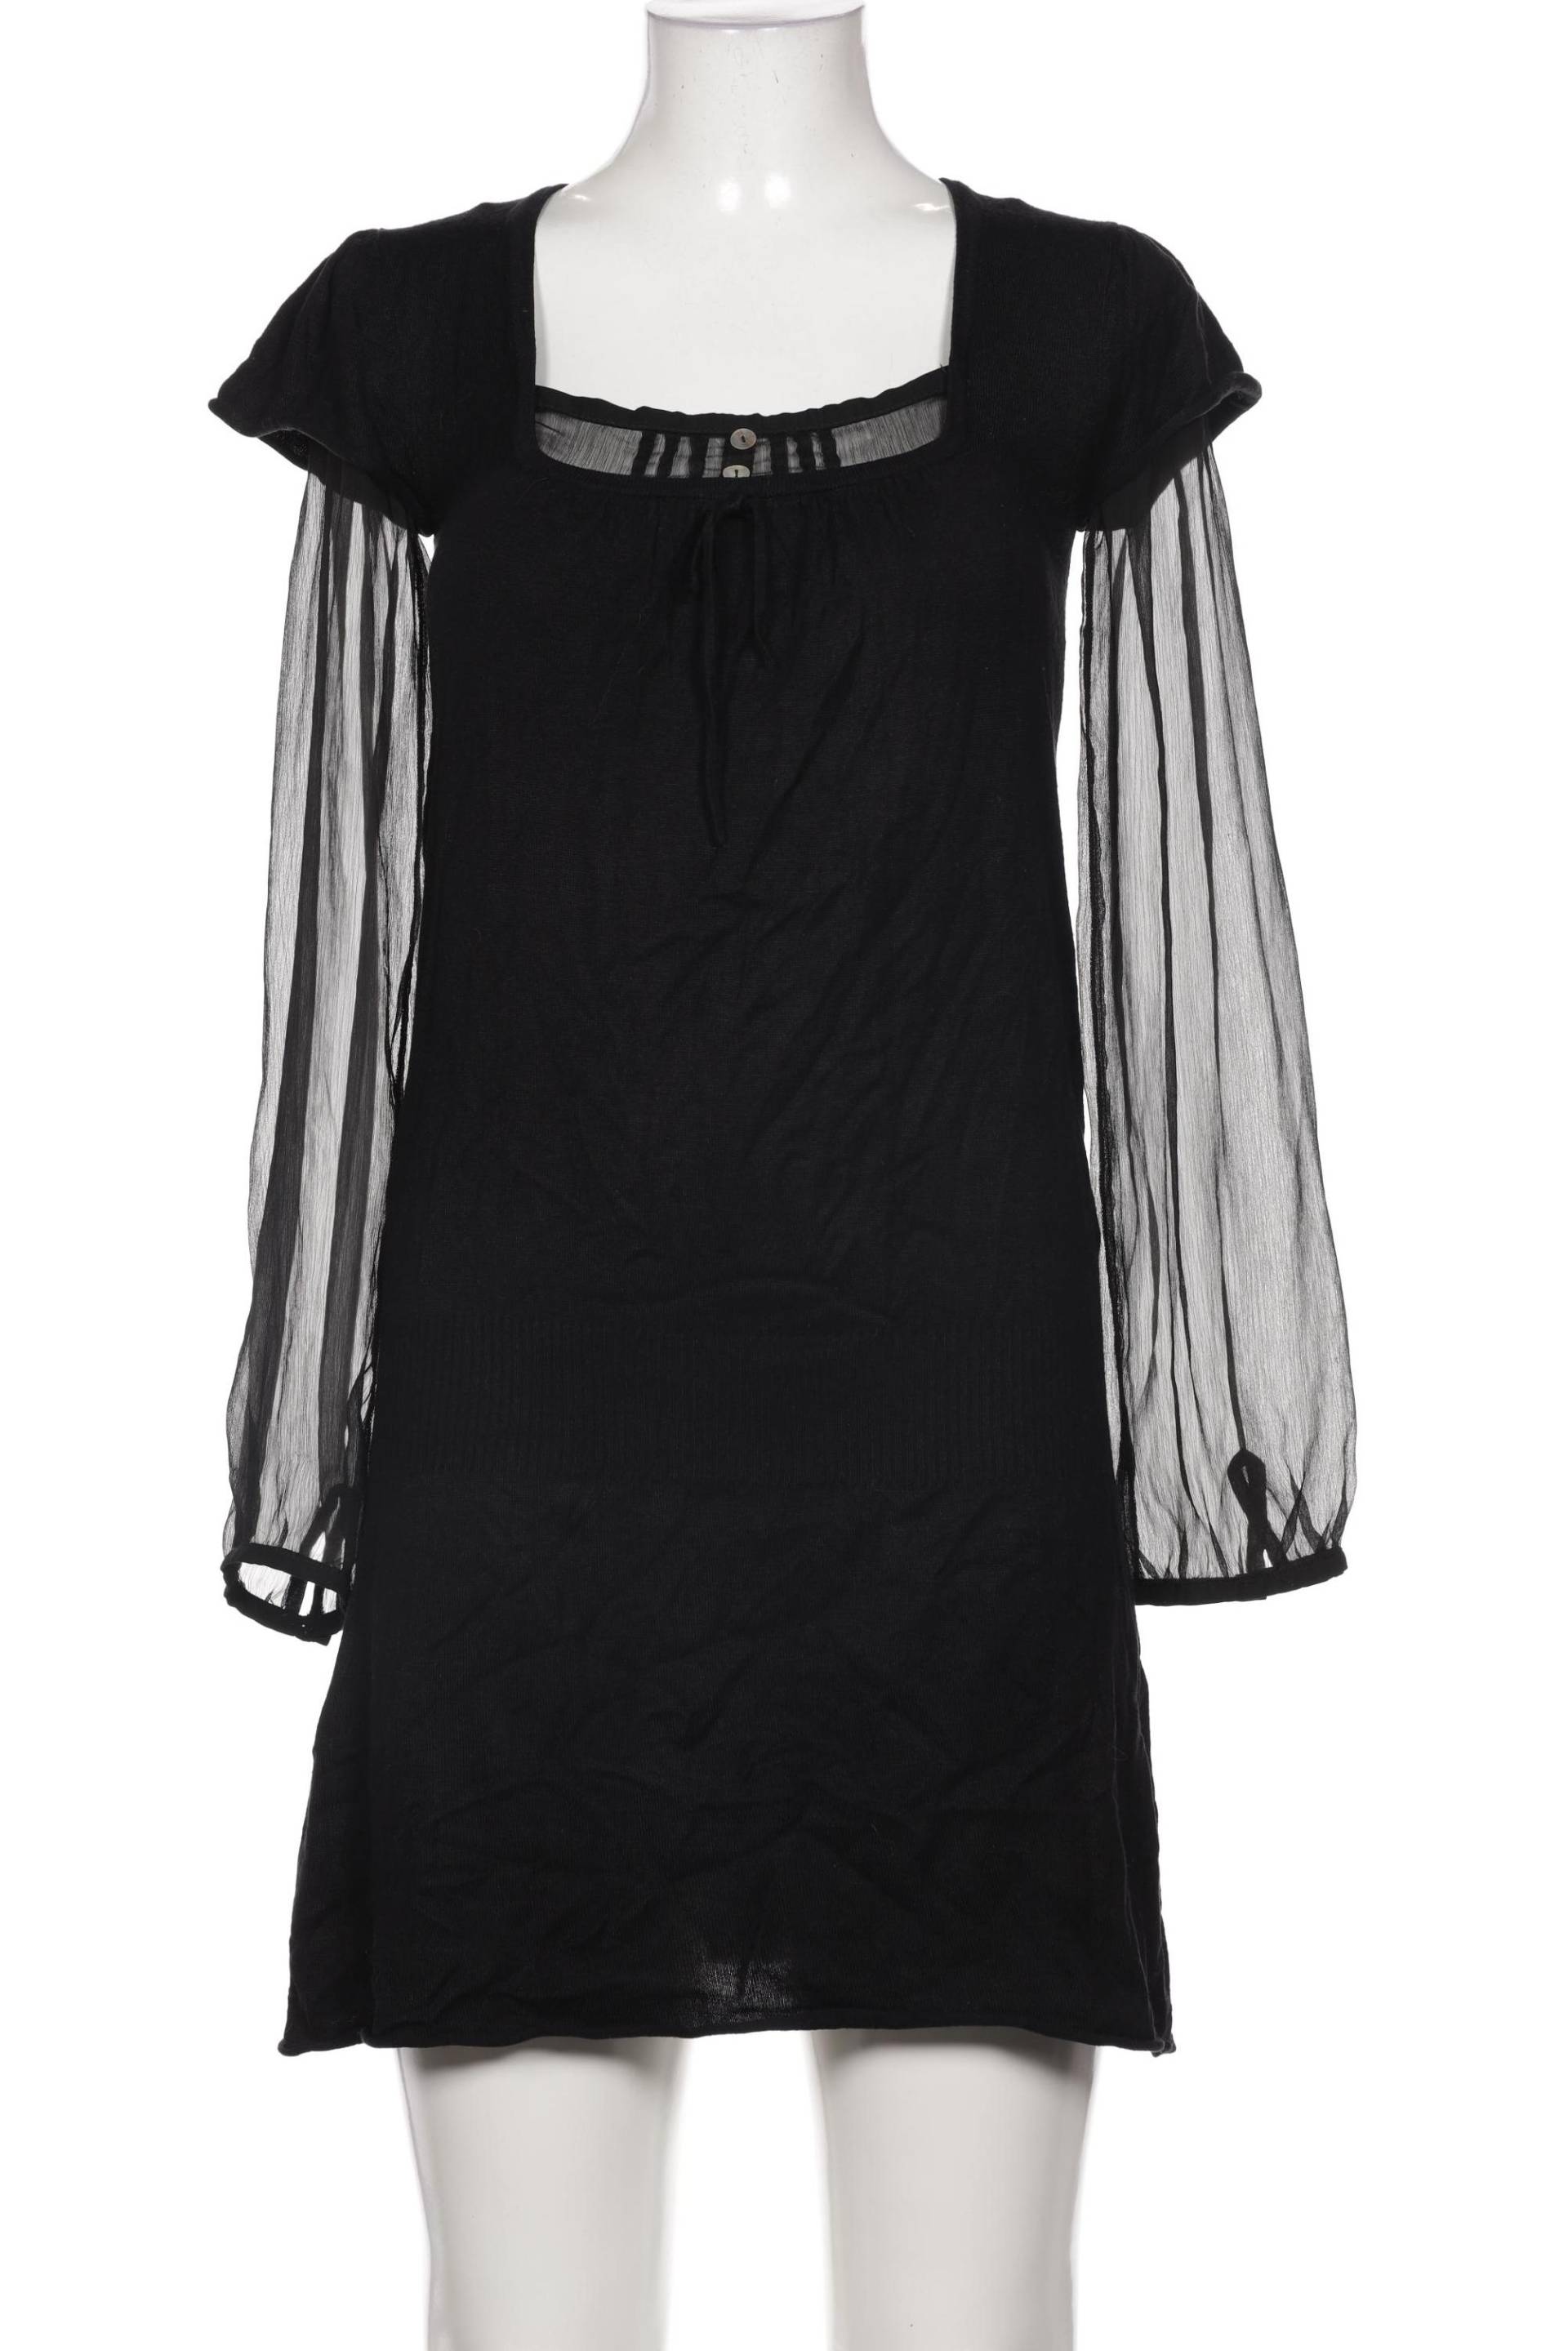 Kiabi Damen Kleid, schwarz, Gr. 38 von Kiabi